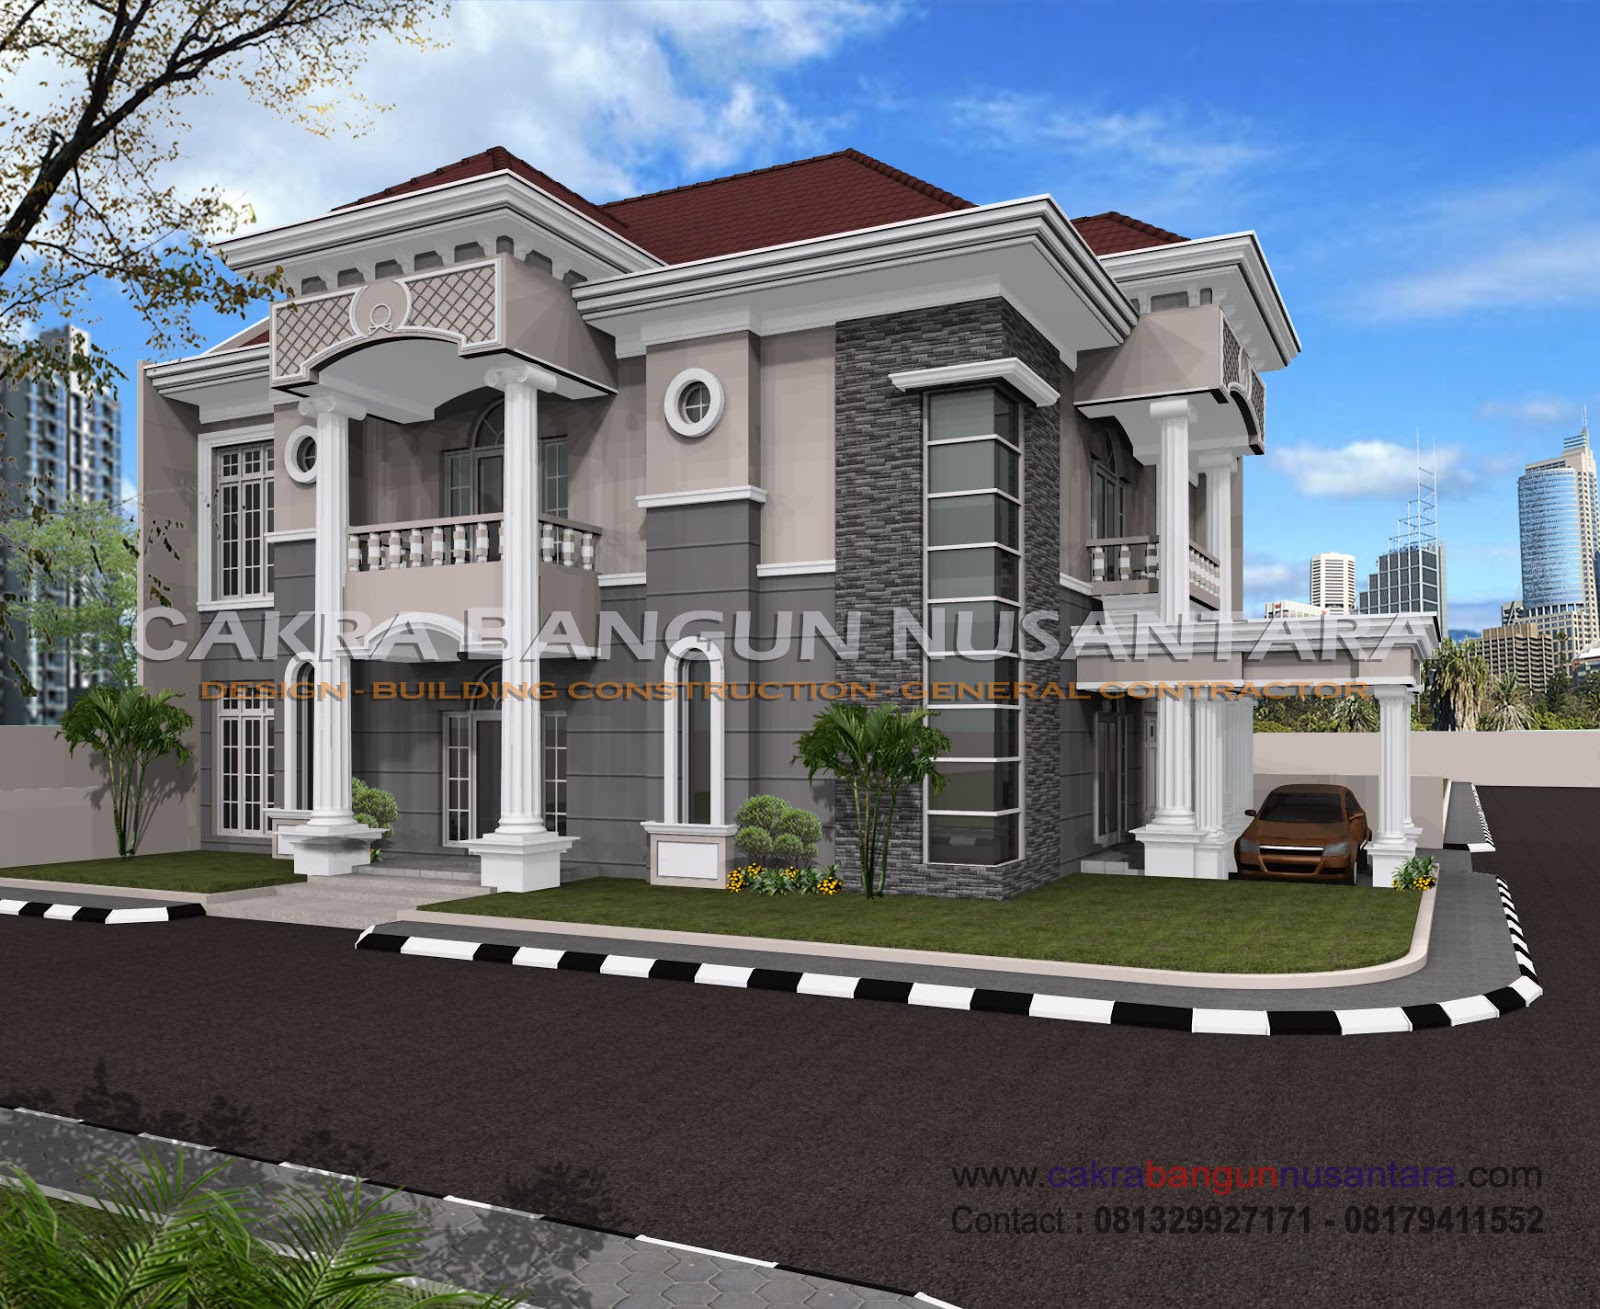 Bangun Rumah Yogyakarta Bersama Cakra Bangun Nusantara Arsitek